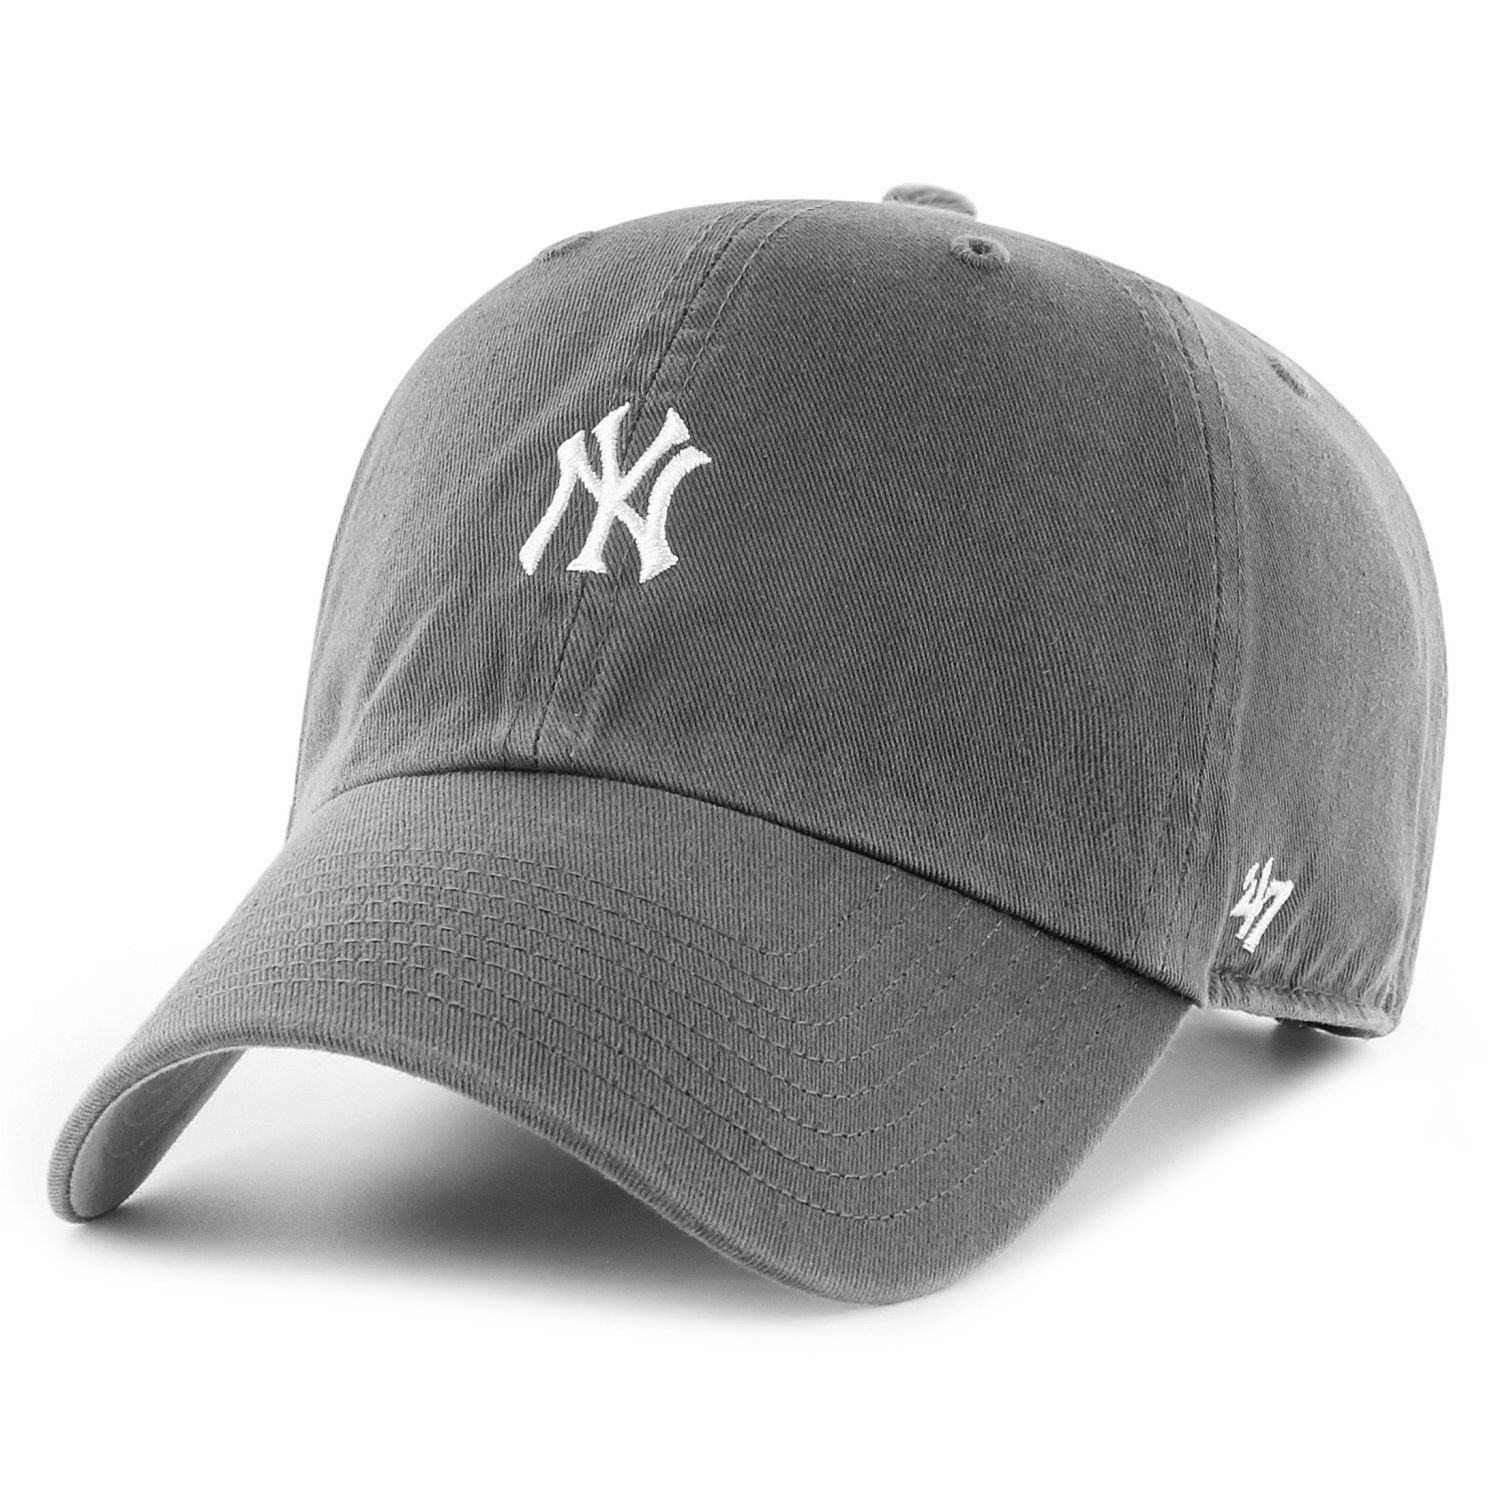 BASE Brand Yankees '47 New Baseball Cap York